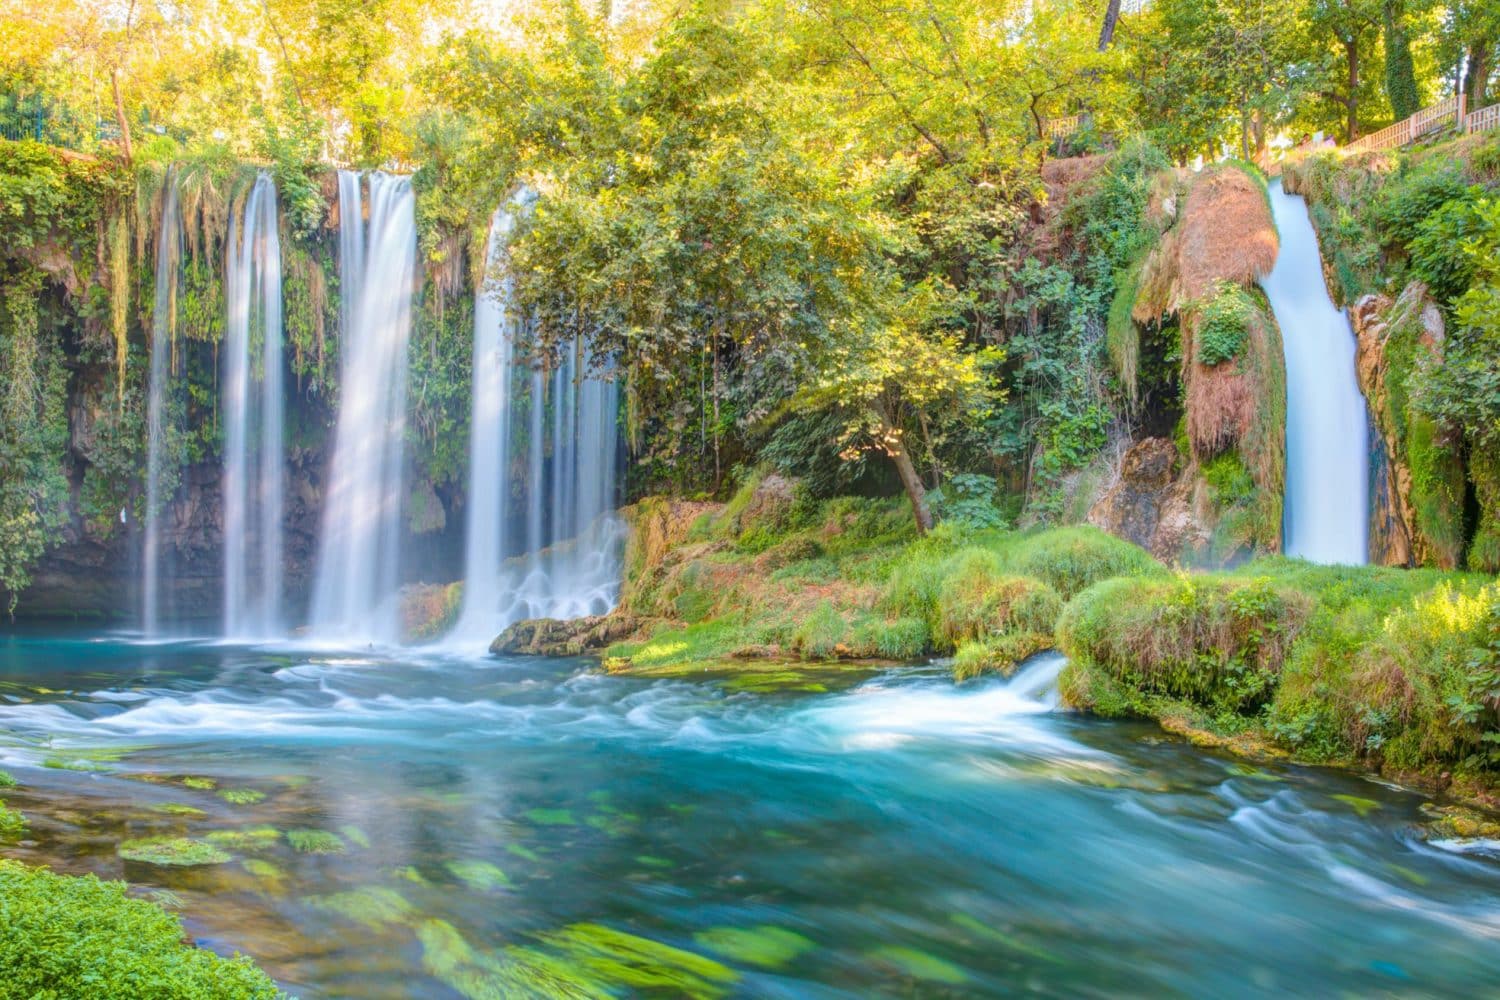 Tour Photos: Antalya Duden waterfalls